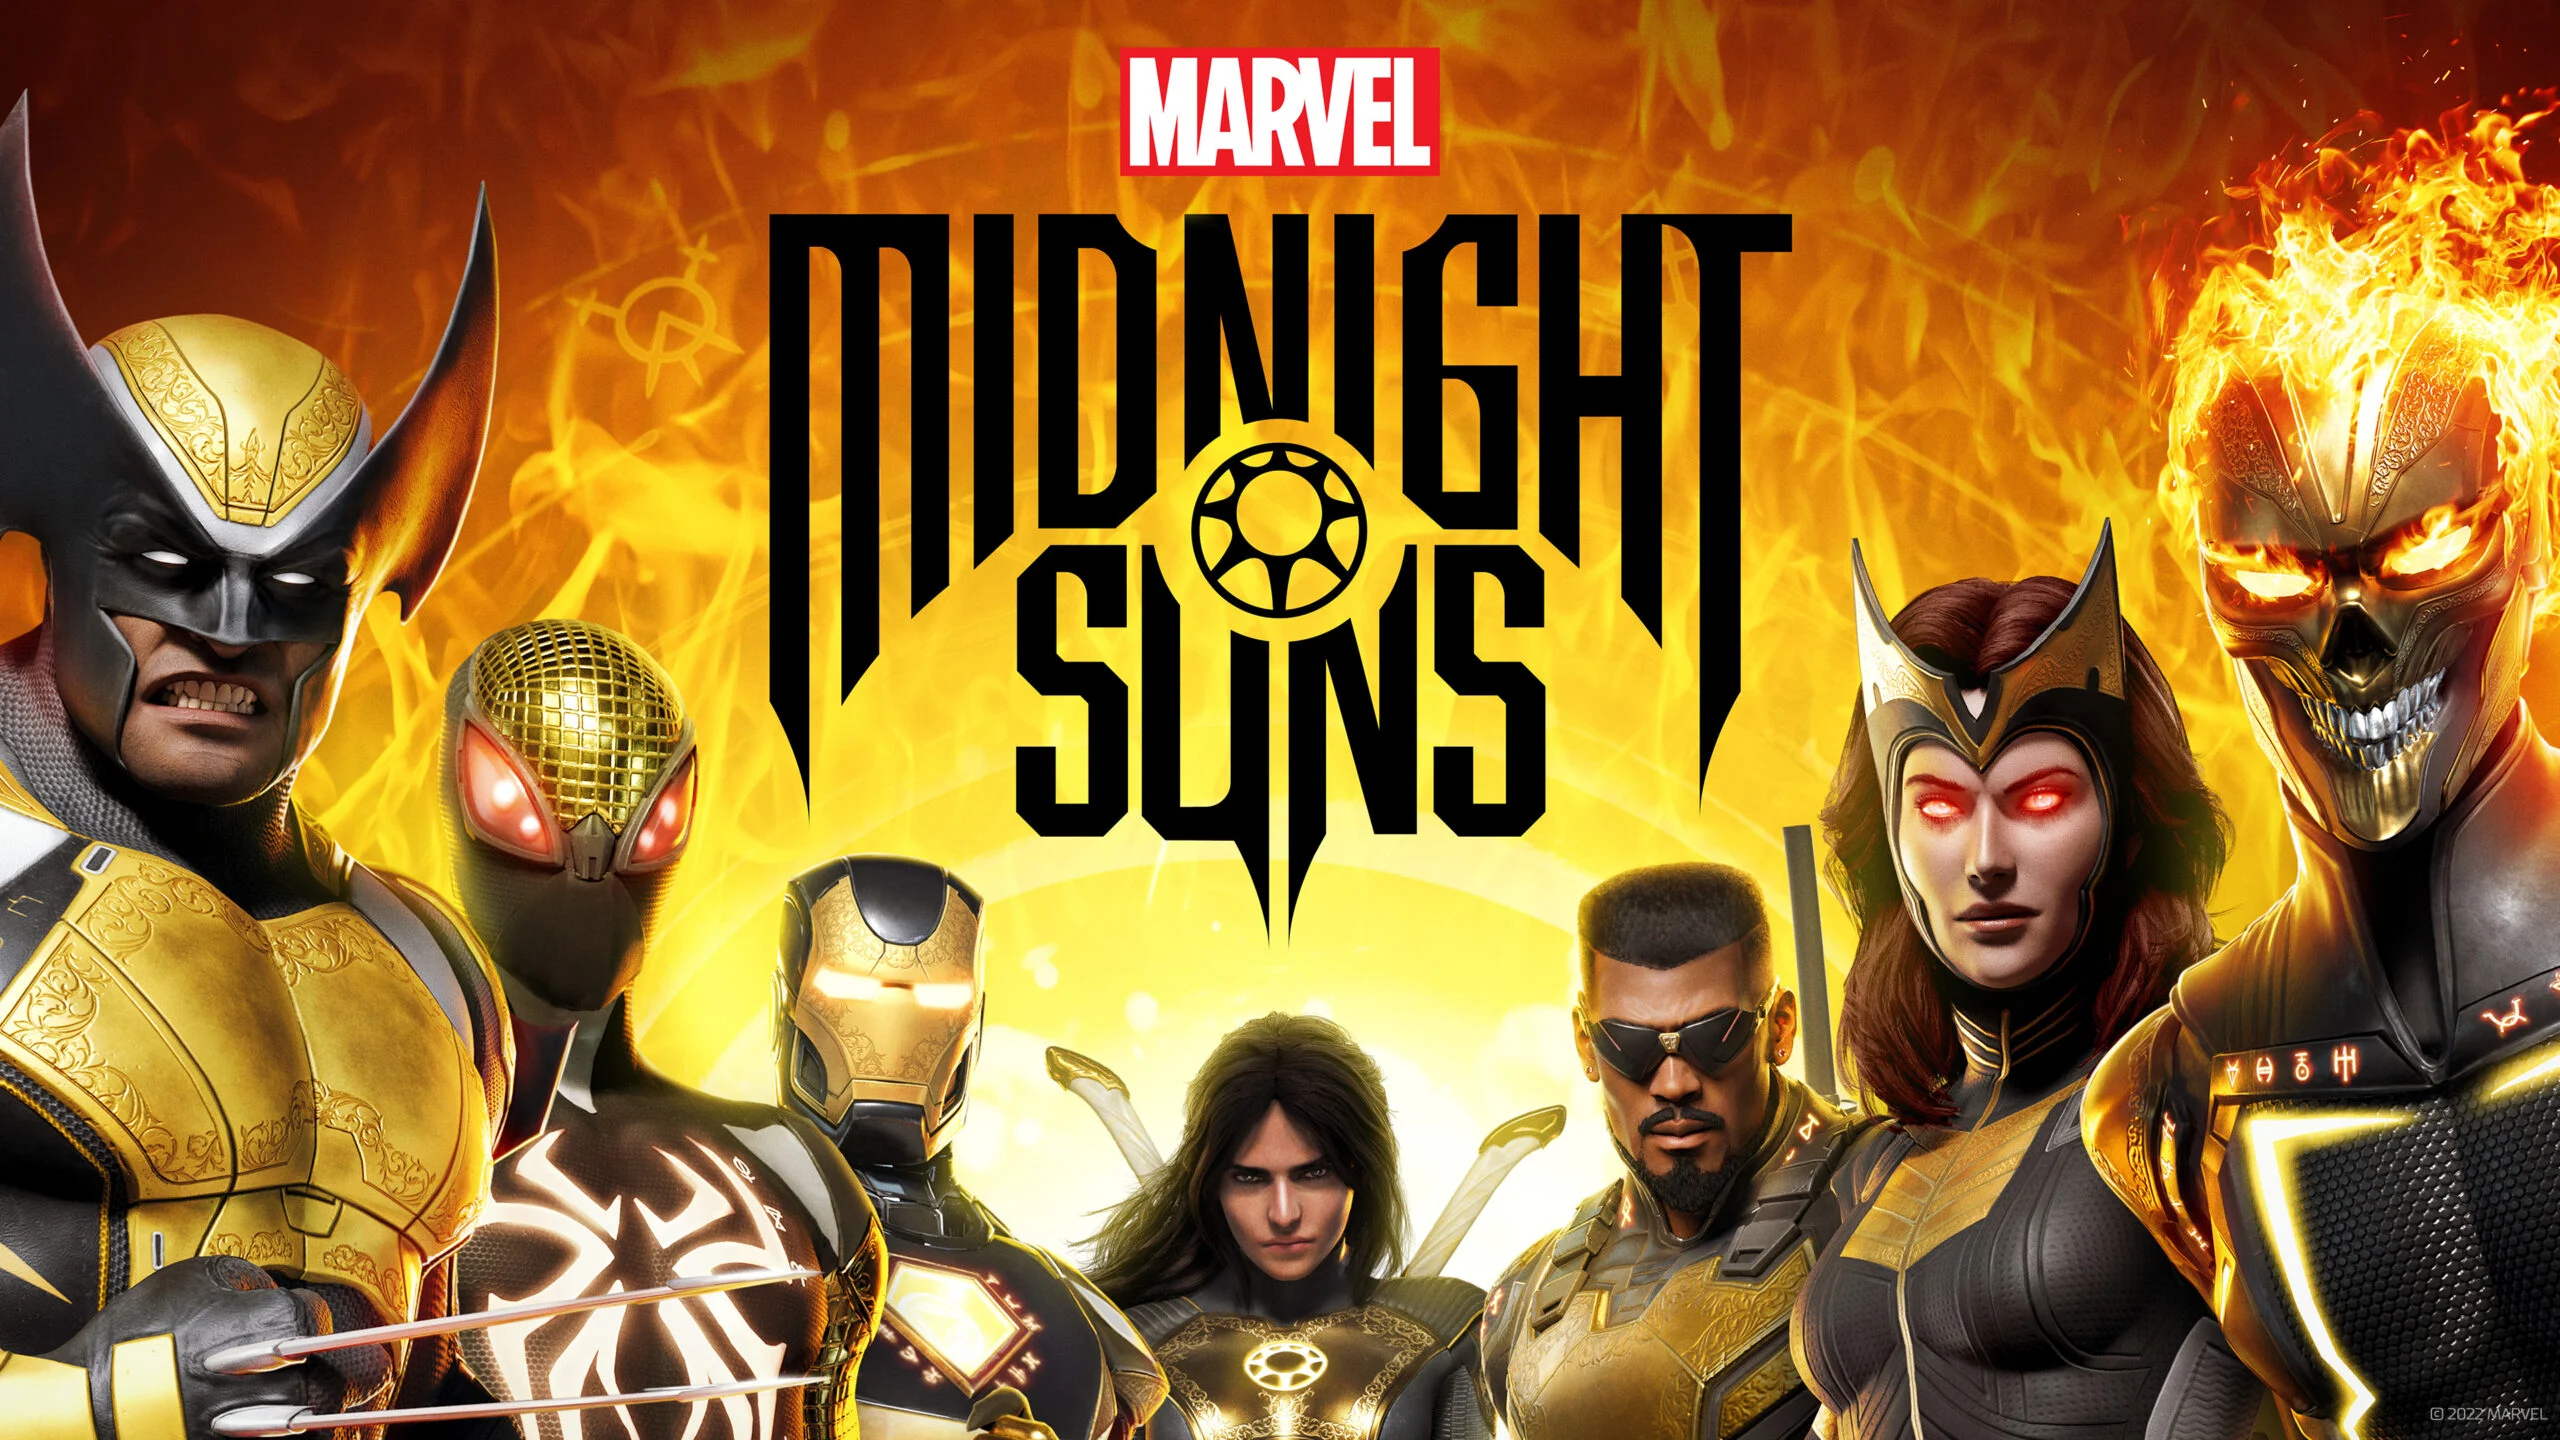 Marvel’s Midnight Suns erneut verschoben Titel